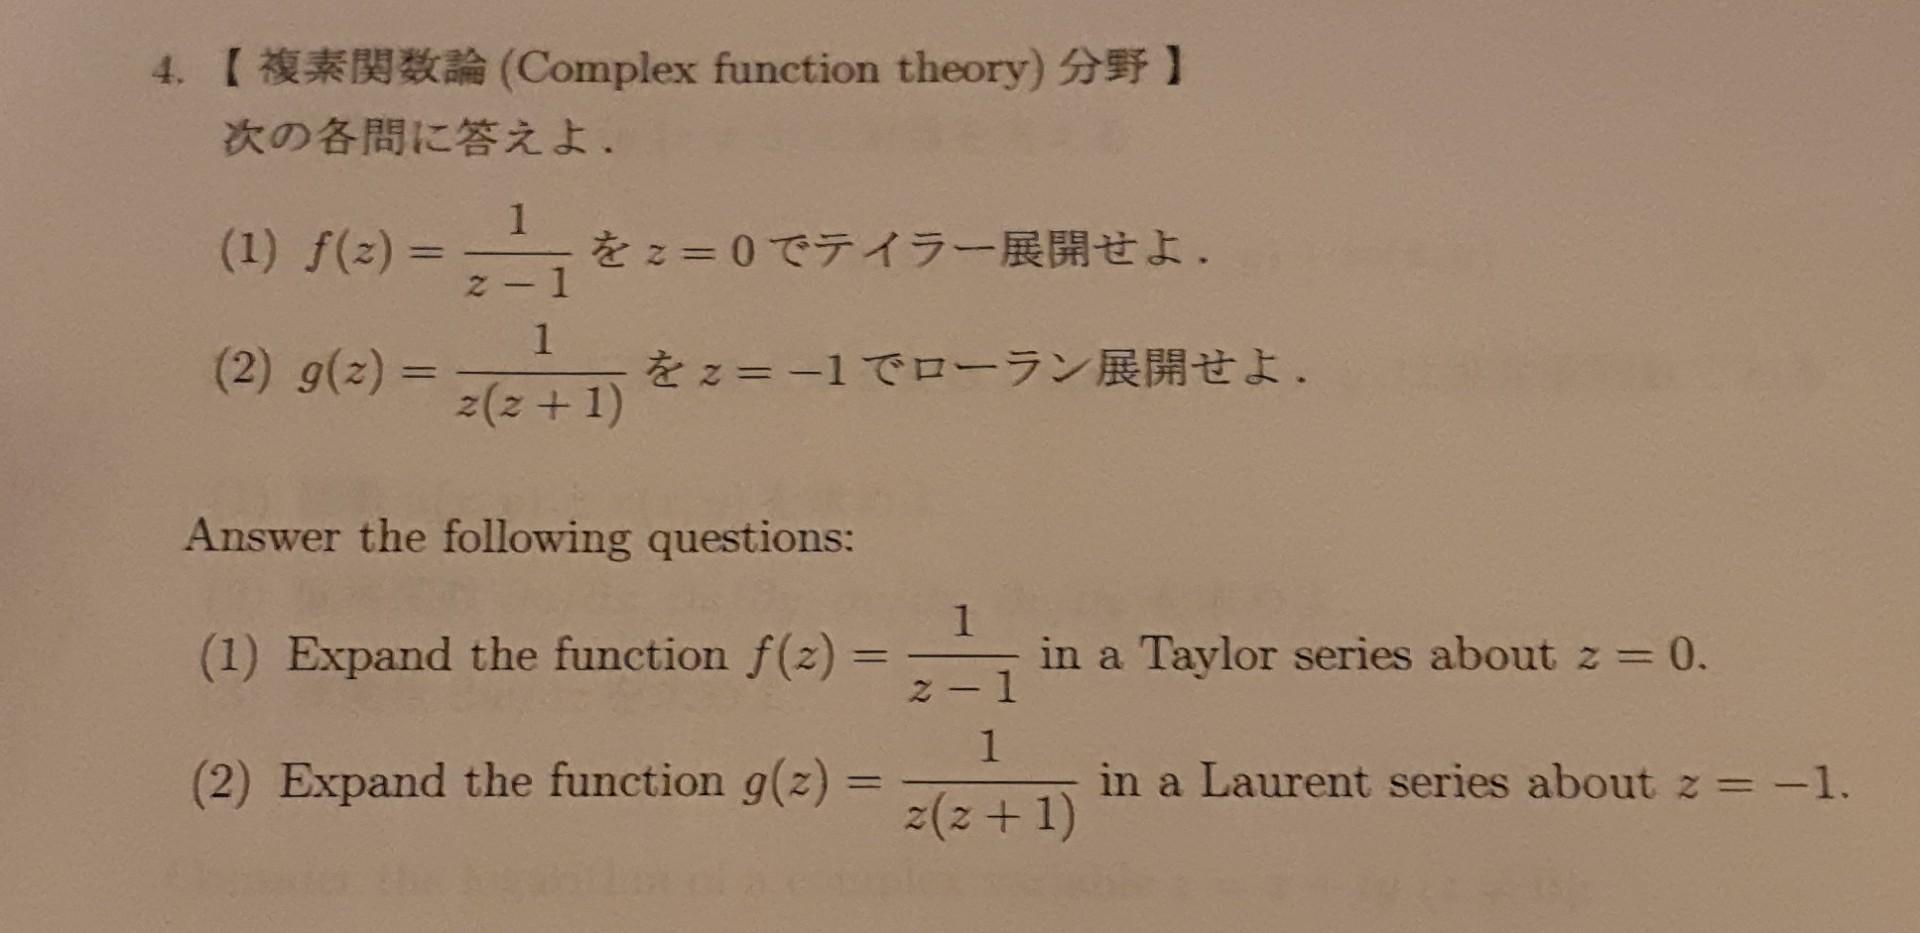 Solved 4. 【複素関数論 (Complex function theory)分野】 次の各問に 